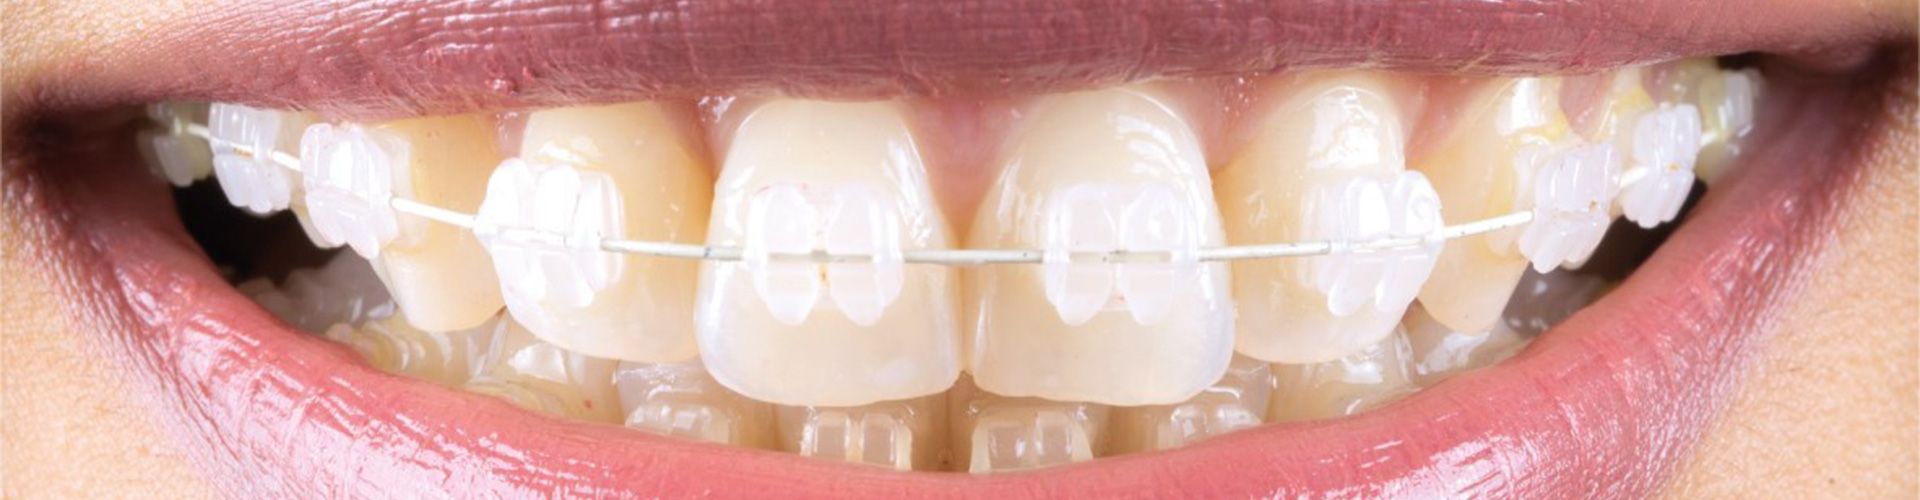 dental braces and orthodontics - Smile Dental Group Ilminster